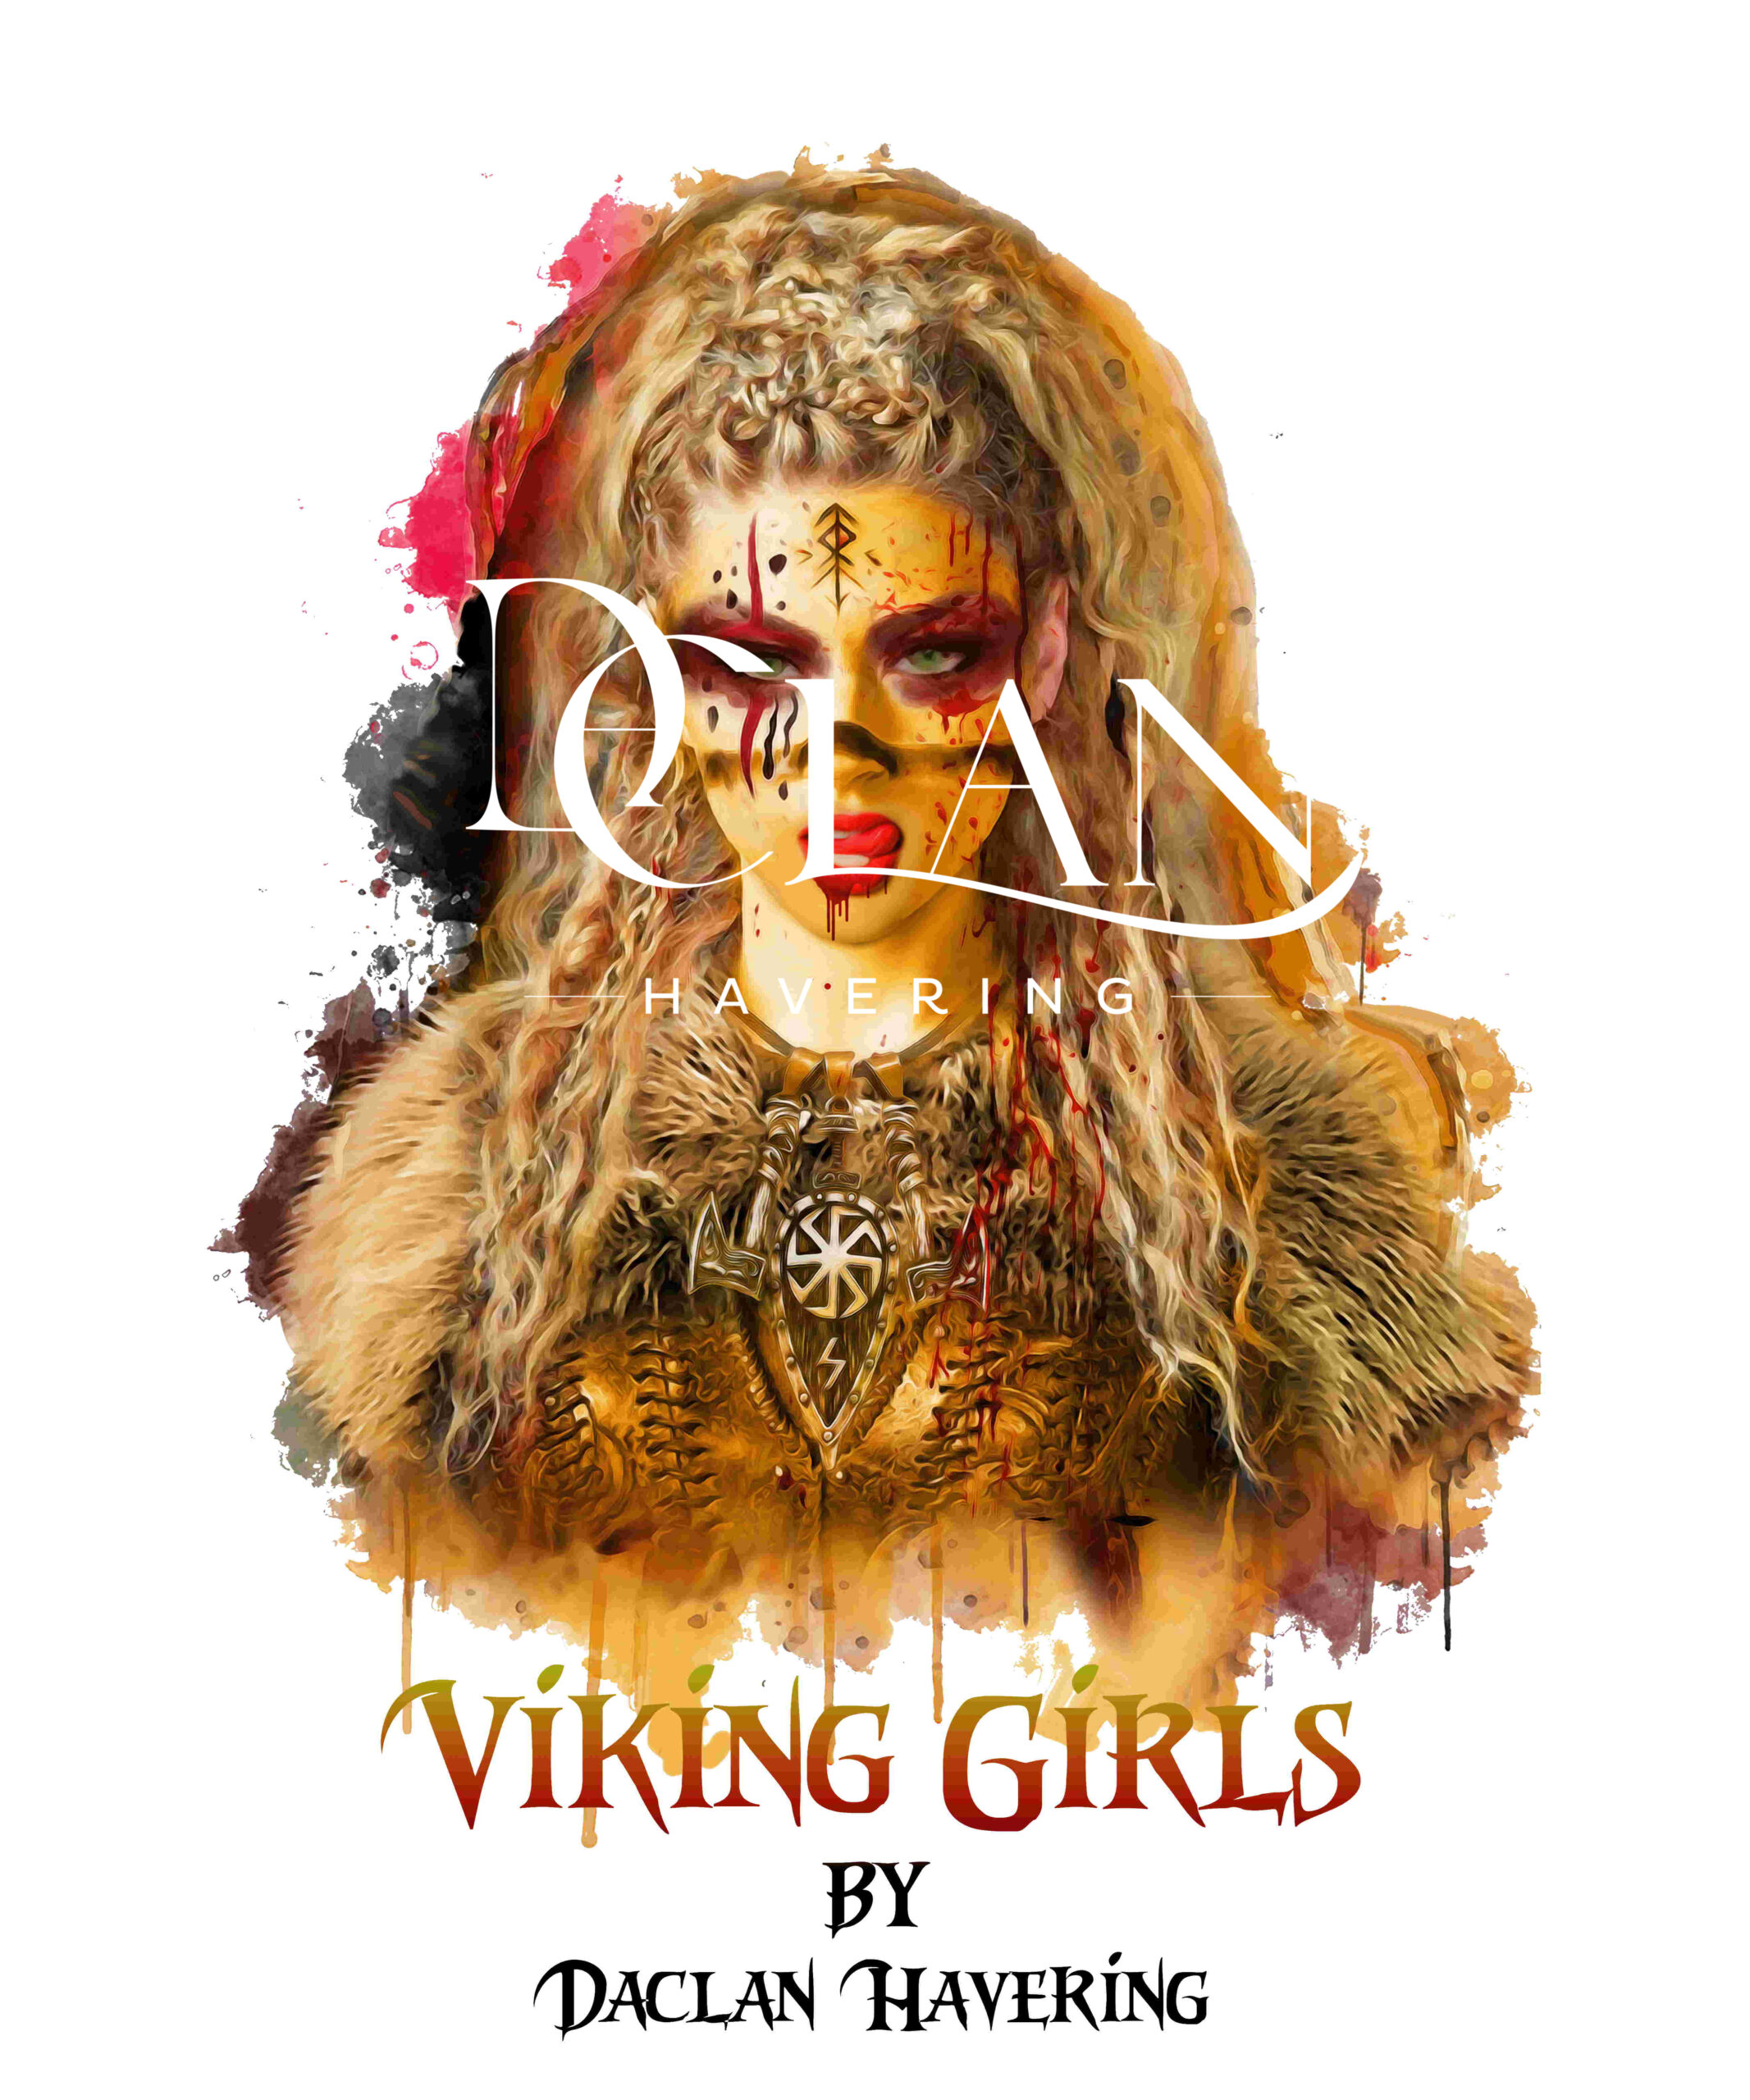 Viking Girls by Daclan Havering "bloody lips"